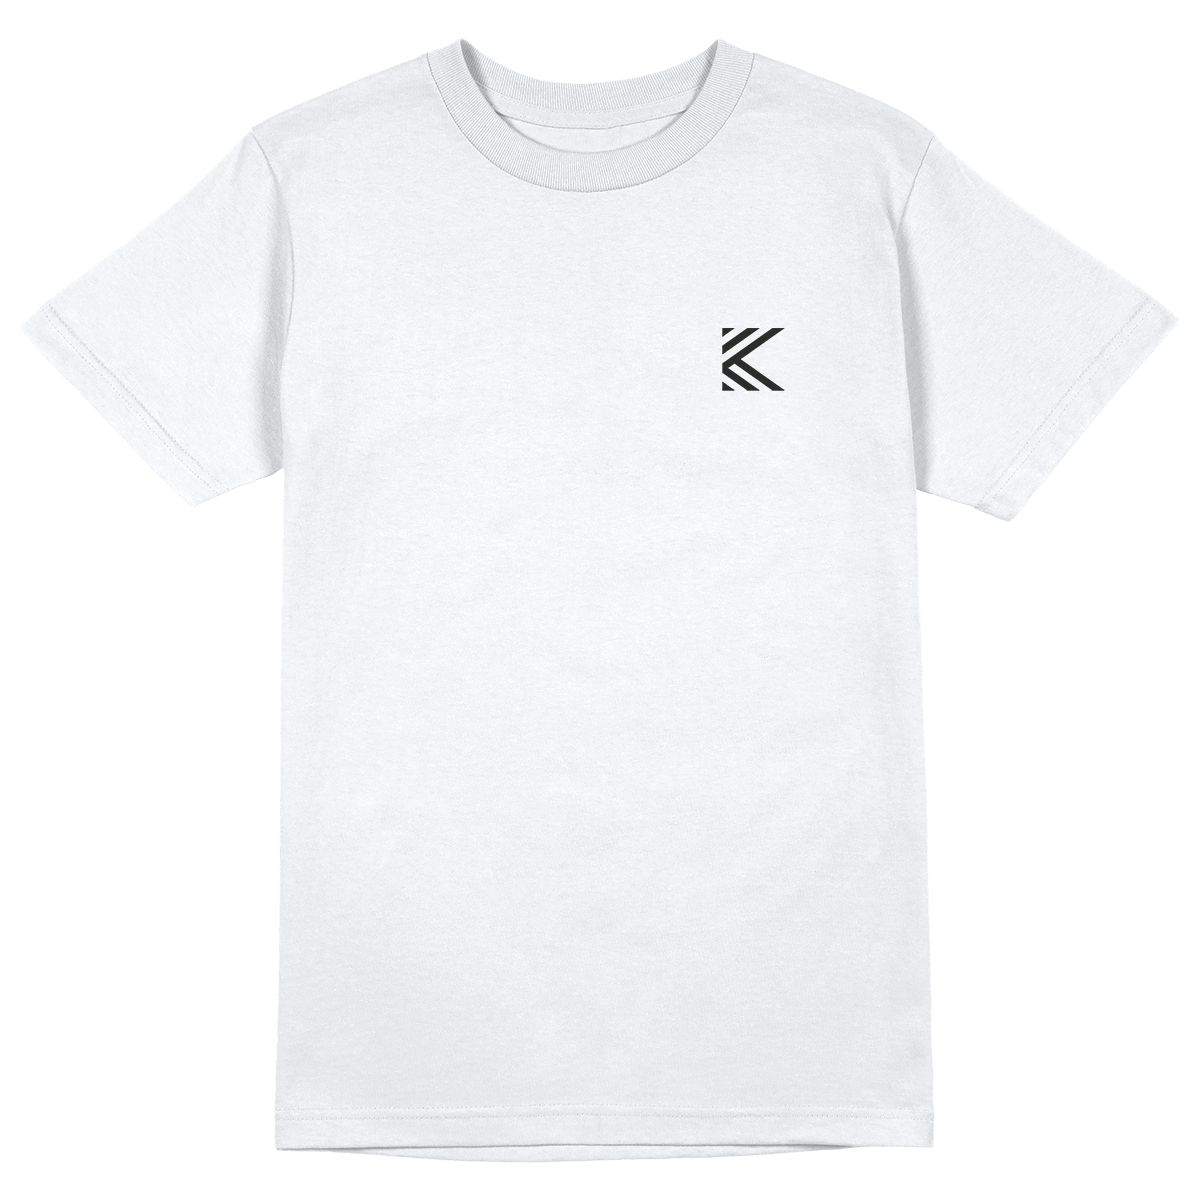 Topfanz T-shirt white "DE K"